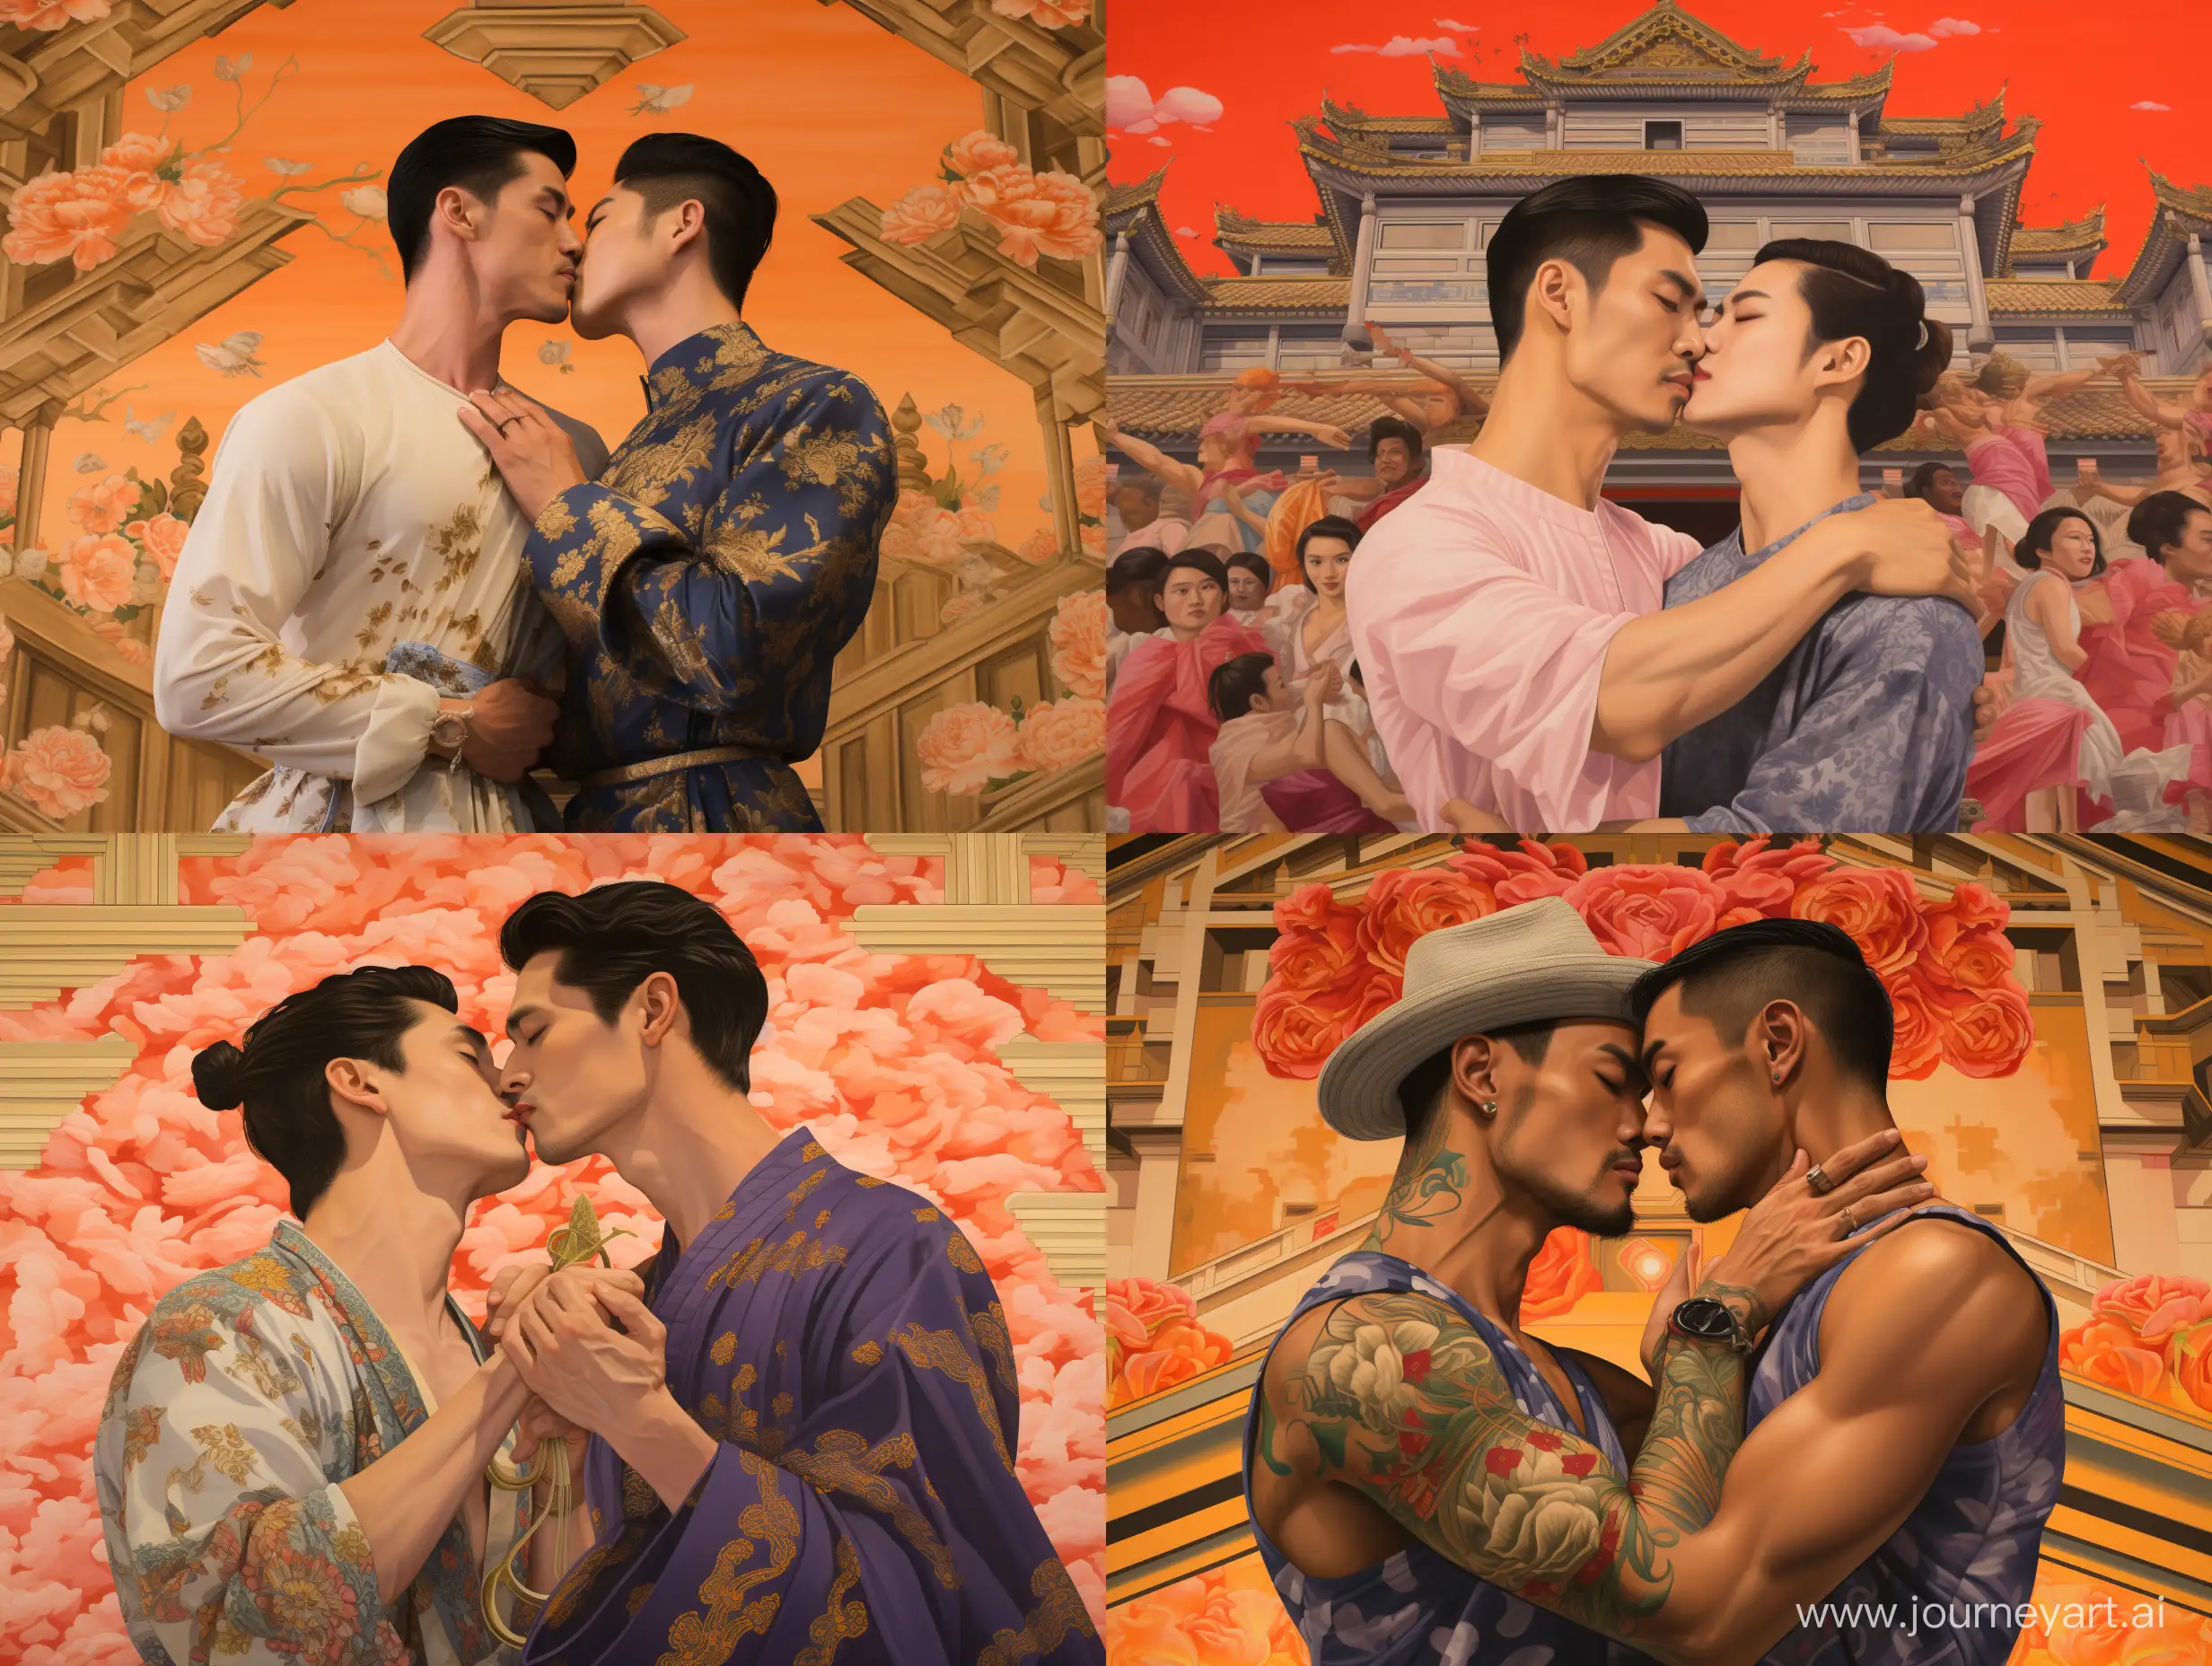 Thailand-Gay-Actors-Embrace-in-Ukiyoe-Style-Portrait-at-Phra-Phrom-Shrine